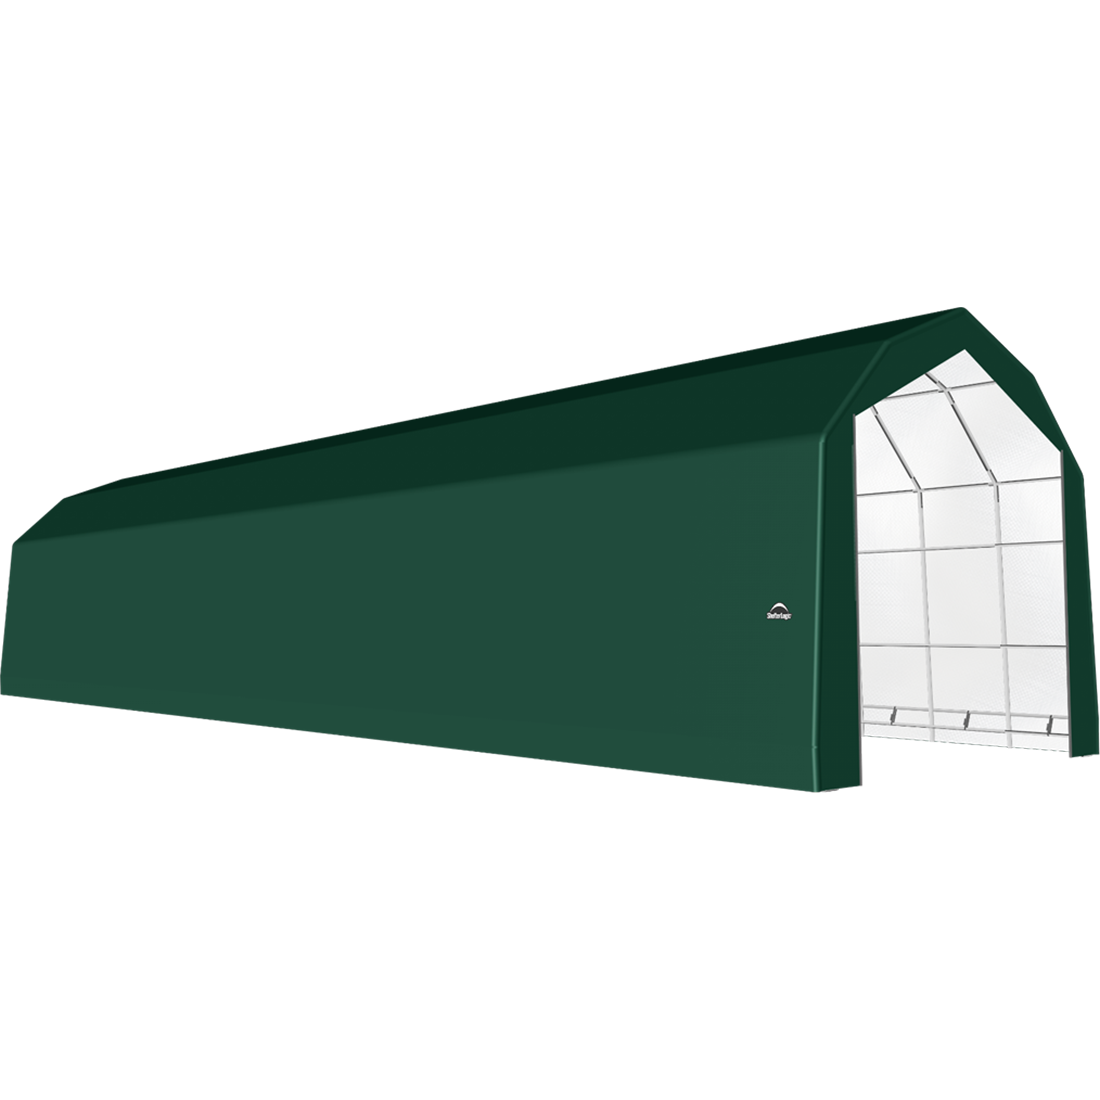 ShelterTech SP Series Barn Shelter, 20 ft. x 84 ft. x 18 ft. Heavy Duty PVC 14.5 oz. Green